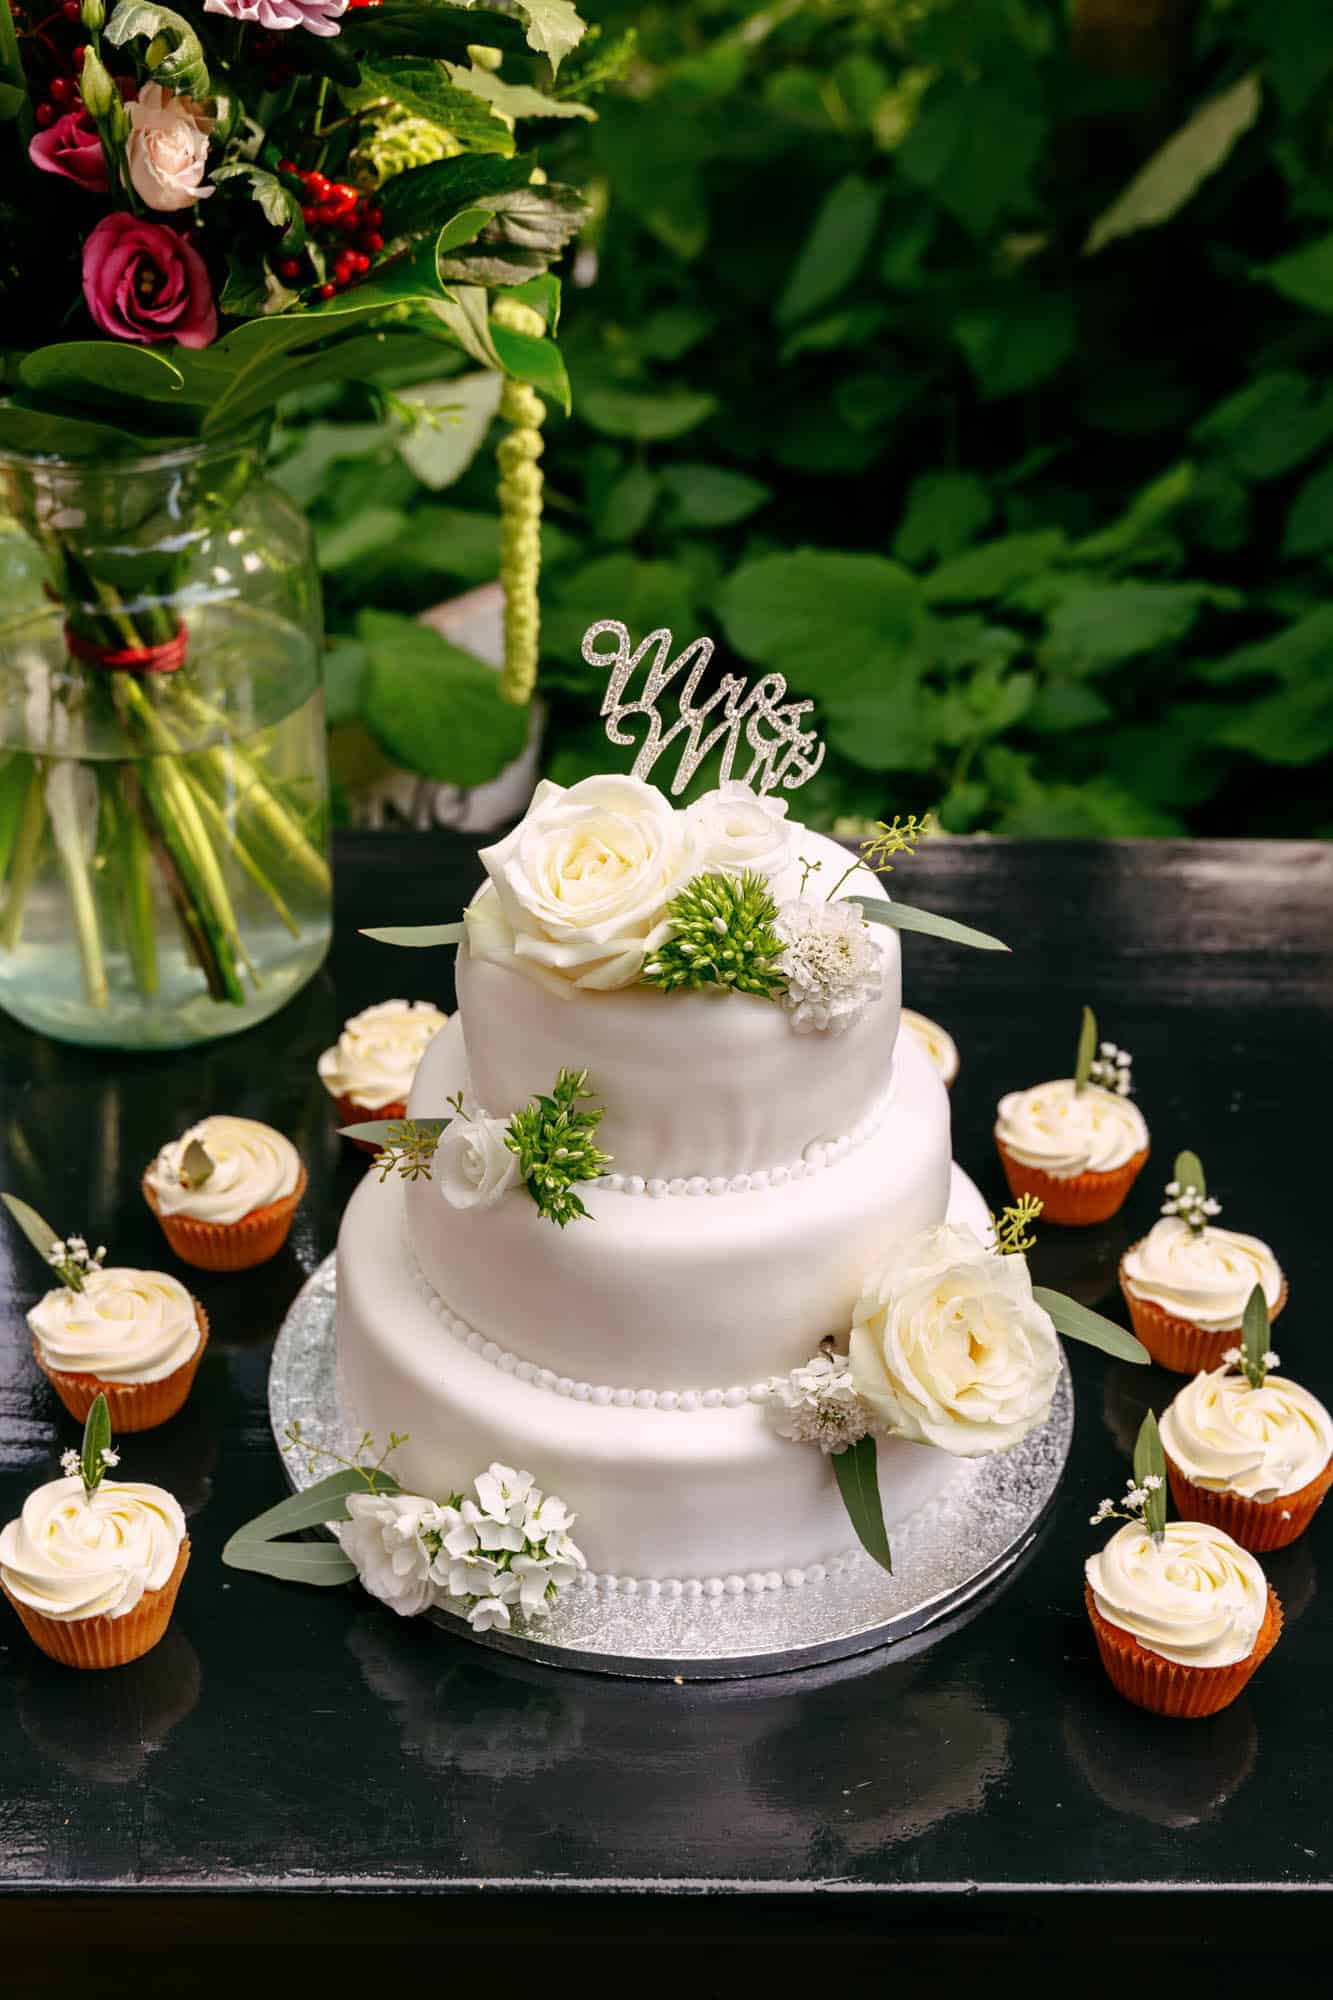 Wedding cake marzipan and roses.